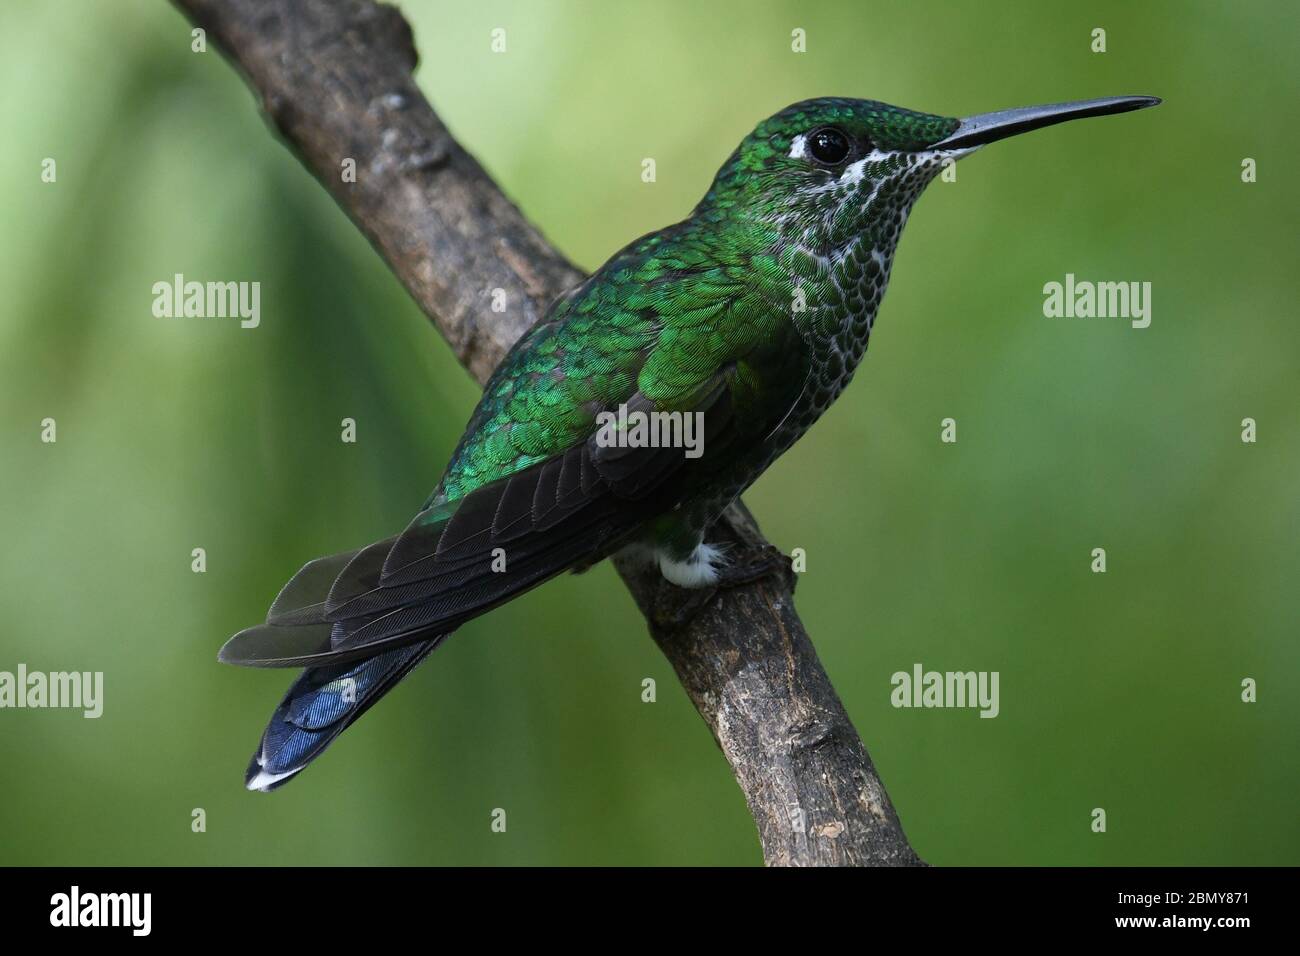 GREEN-CROWNED BRILLIANT (HUMMINGBIRD) Stock Photo